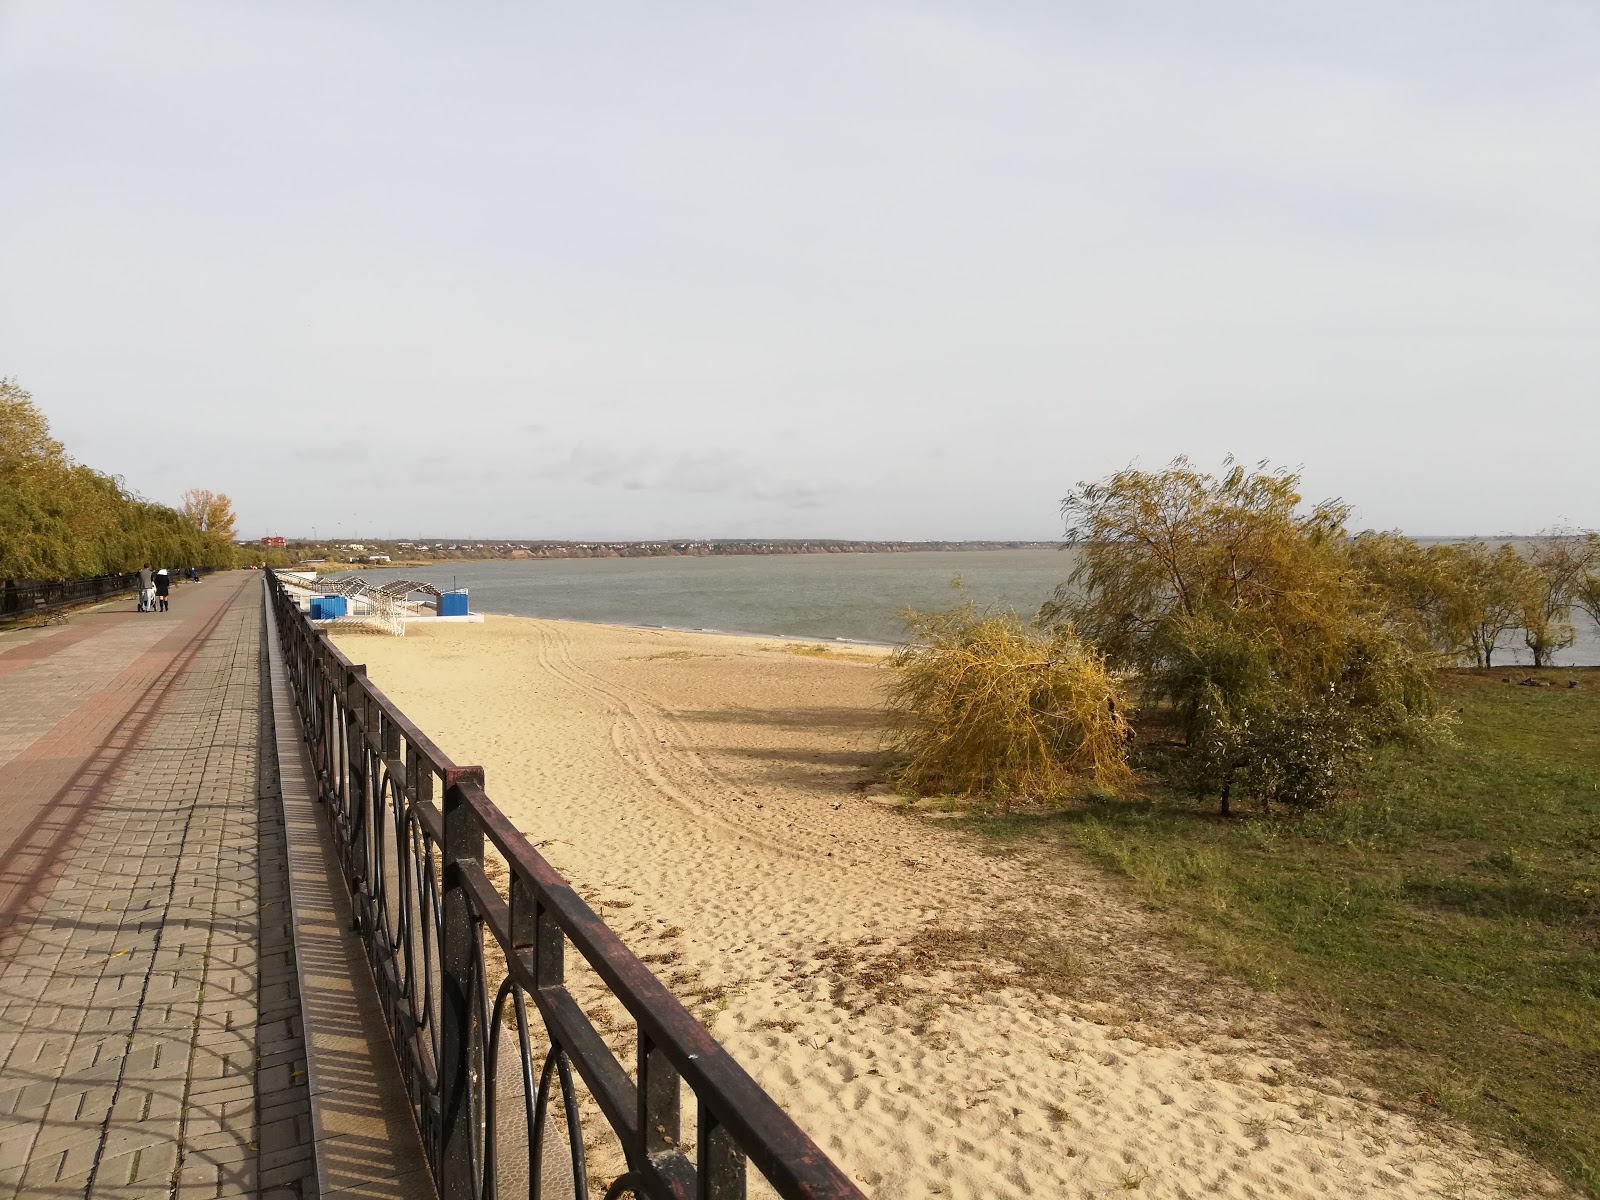 Foto de Plazh Taganrog II zona salvaje